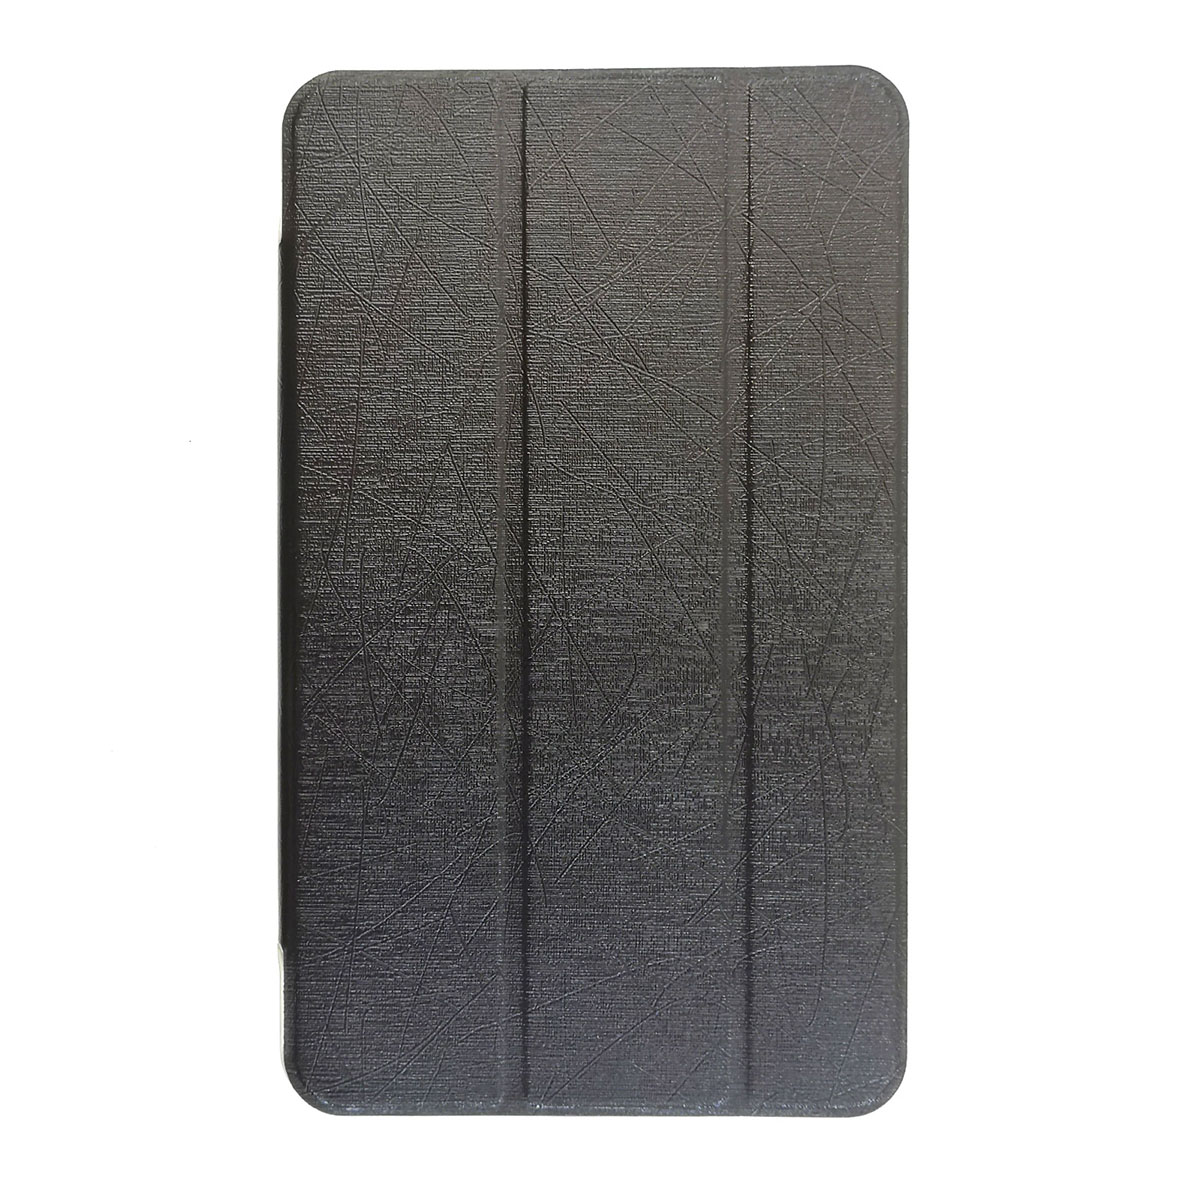 Чехол Folio Cover для SAMSUNG Galaxy Tab E 8.0 (SM-T377), цвет черный.